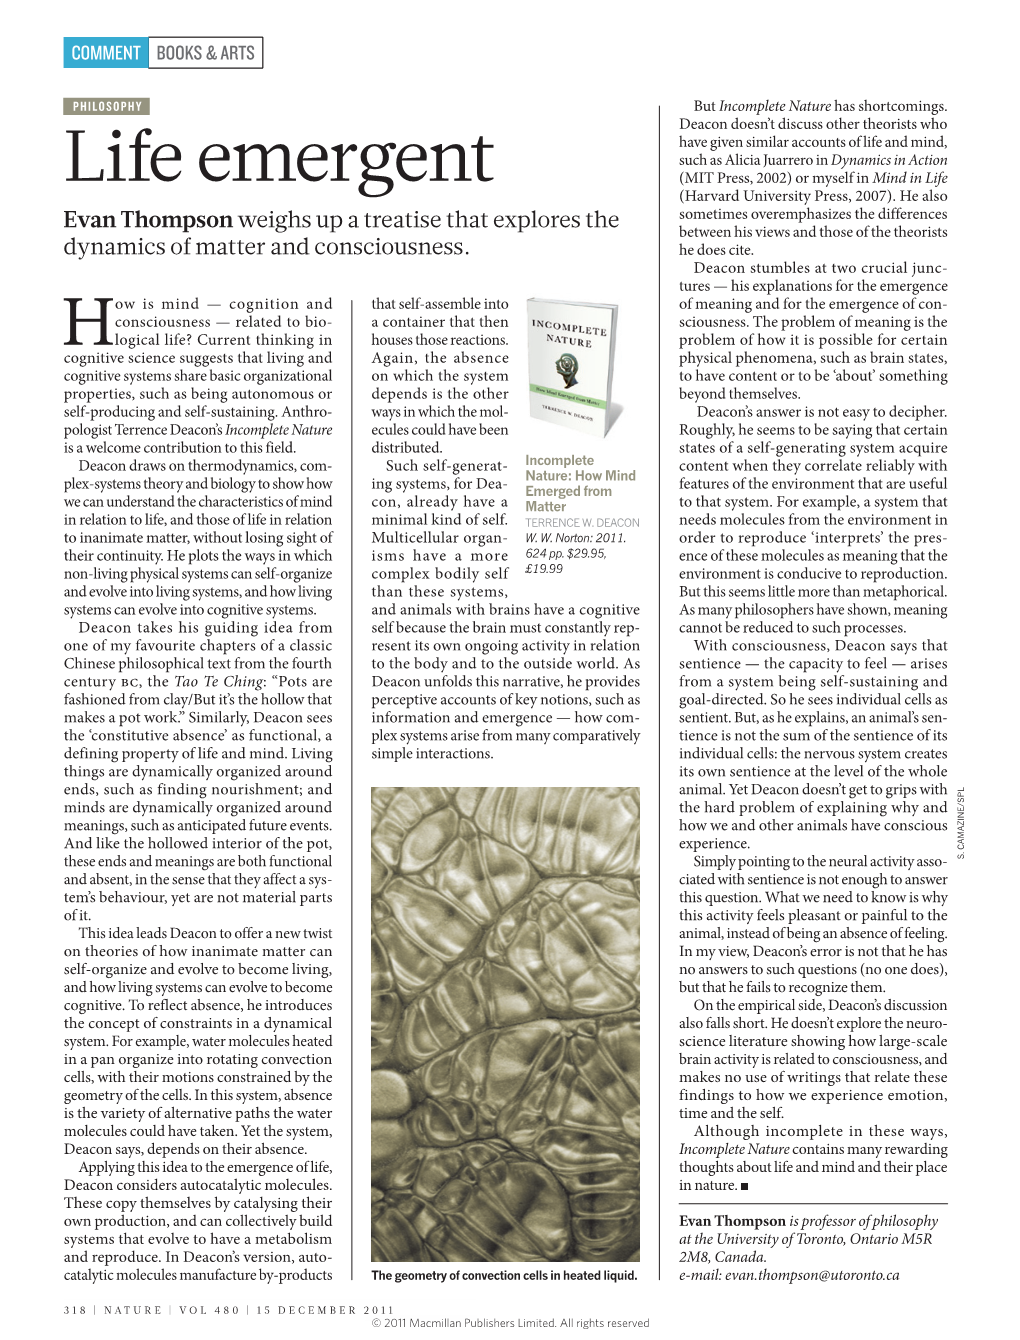 Life Emergent (MIT Press, 2002) Or Myself in Mind in Life (Harvard University Press, 2007)